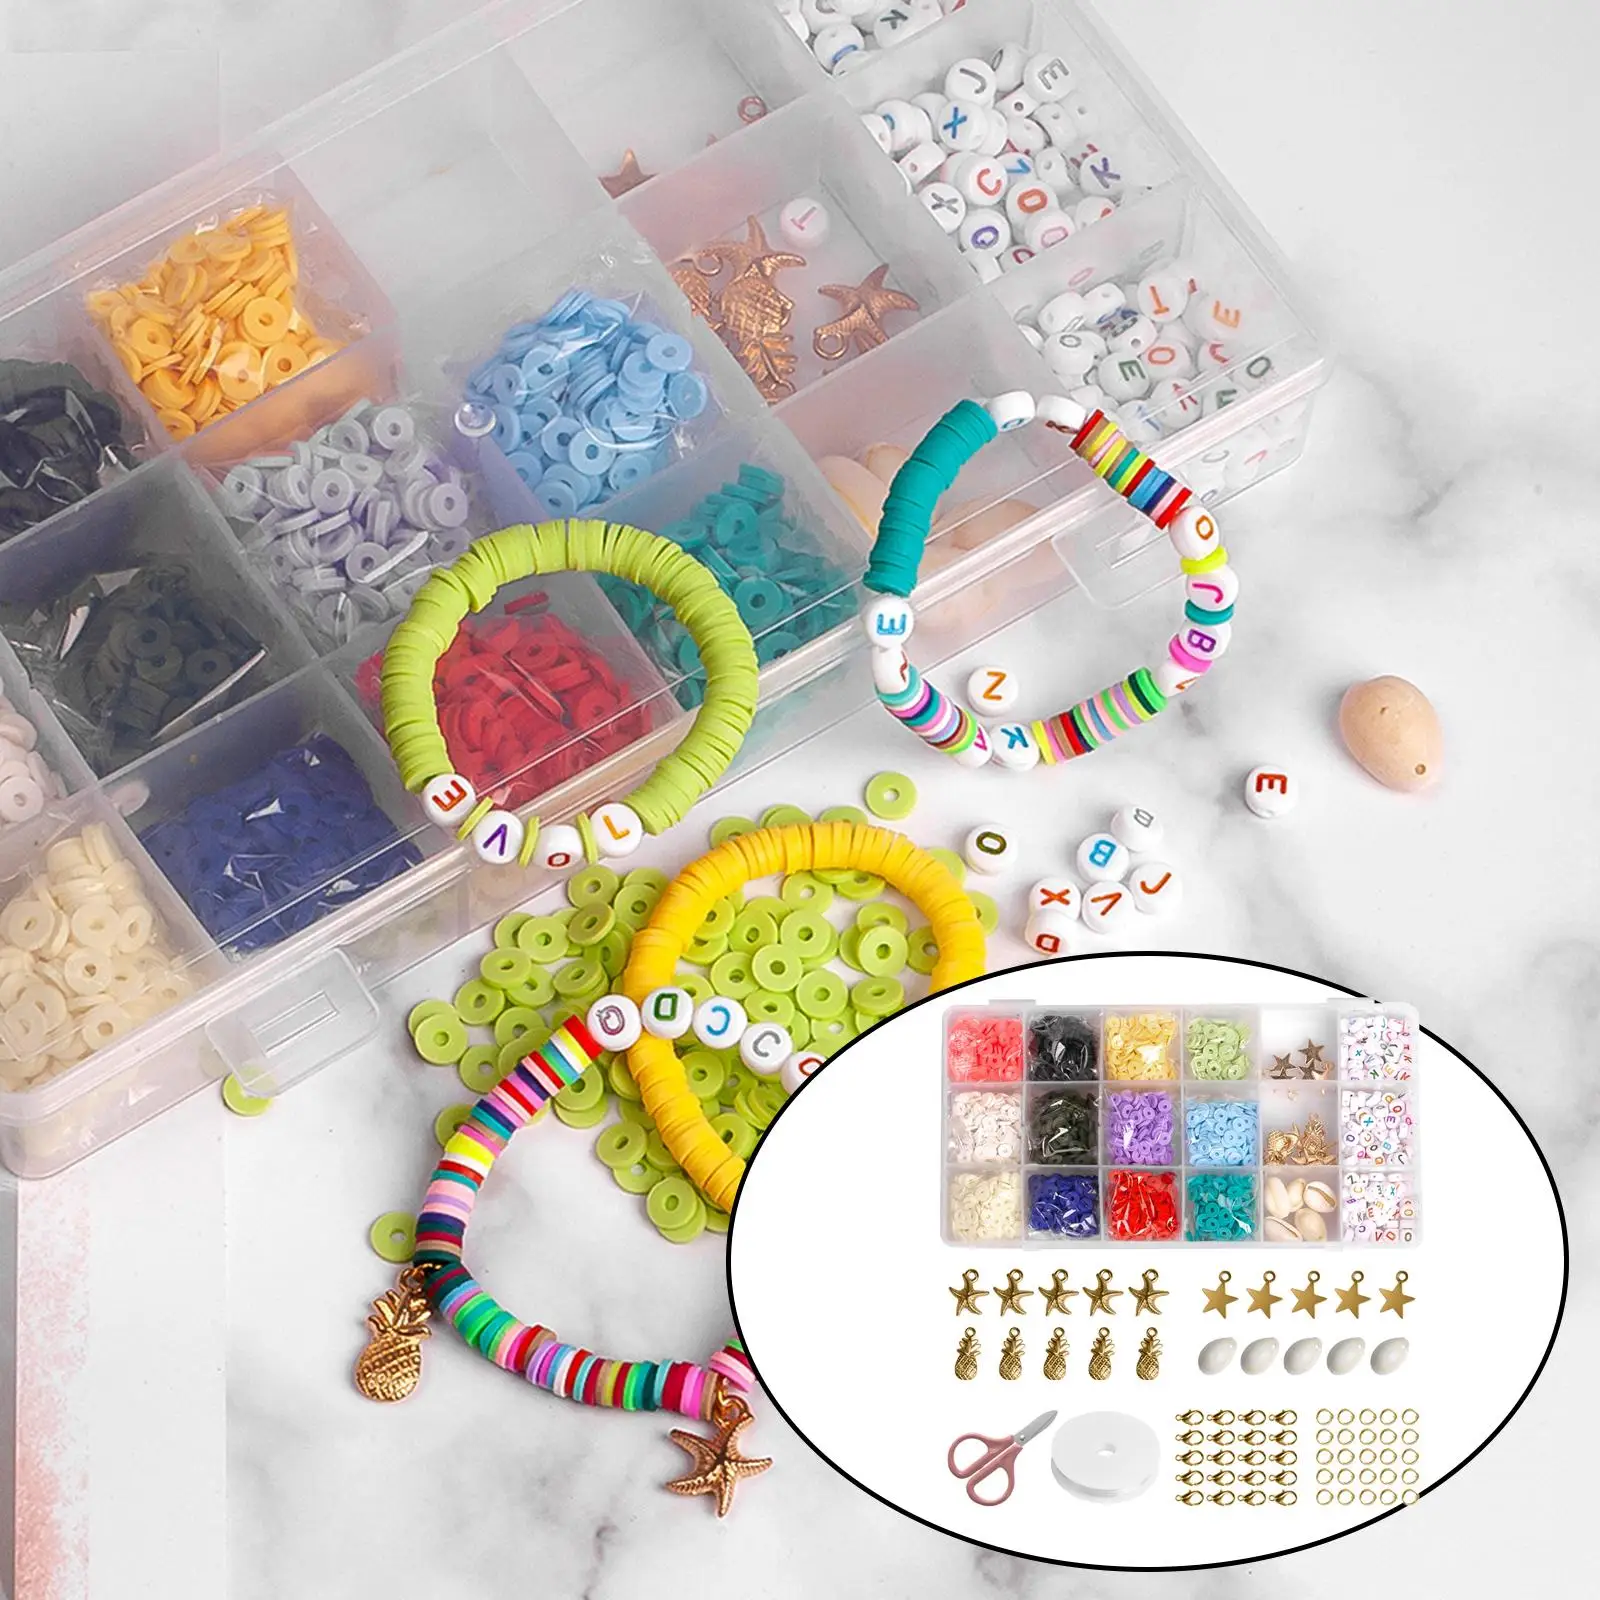  Jewellery Making Kit Findings Handmade DIY Beading Crafting for Earring Craft